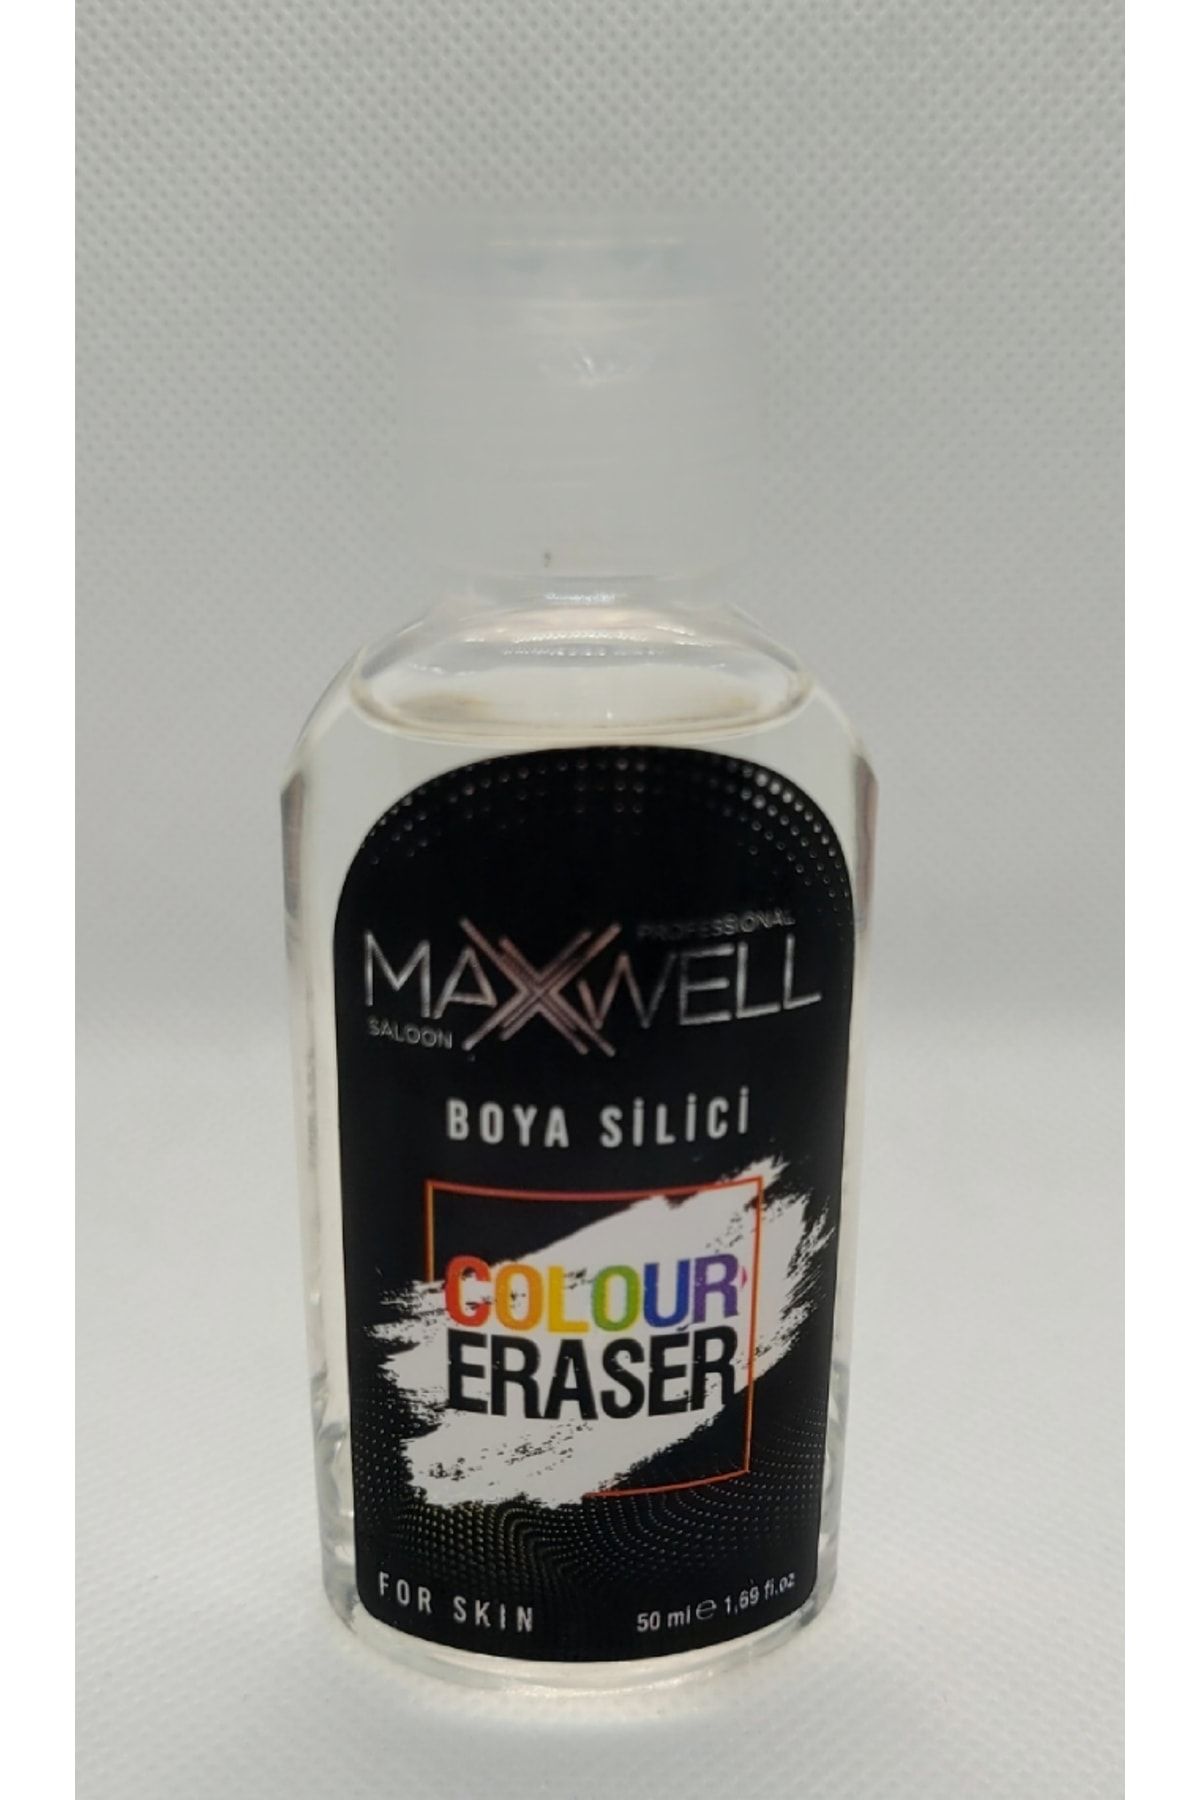 Maxwell Boya Silici-color Eraser For Skin 50ml